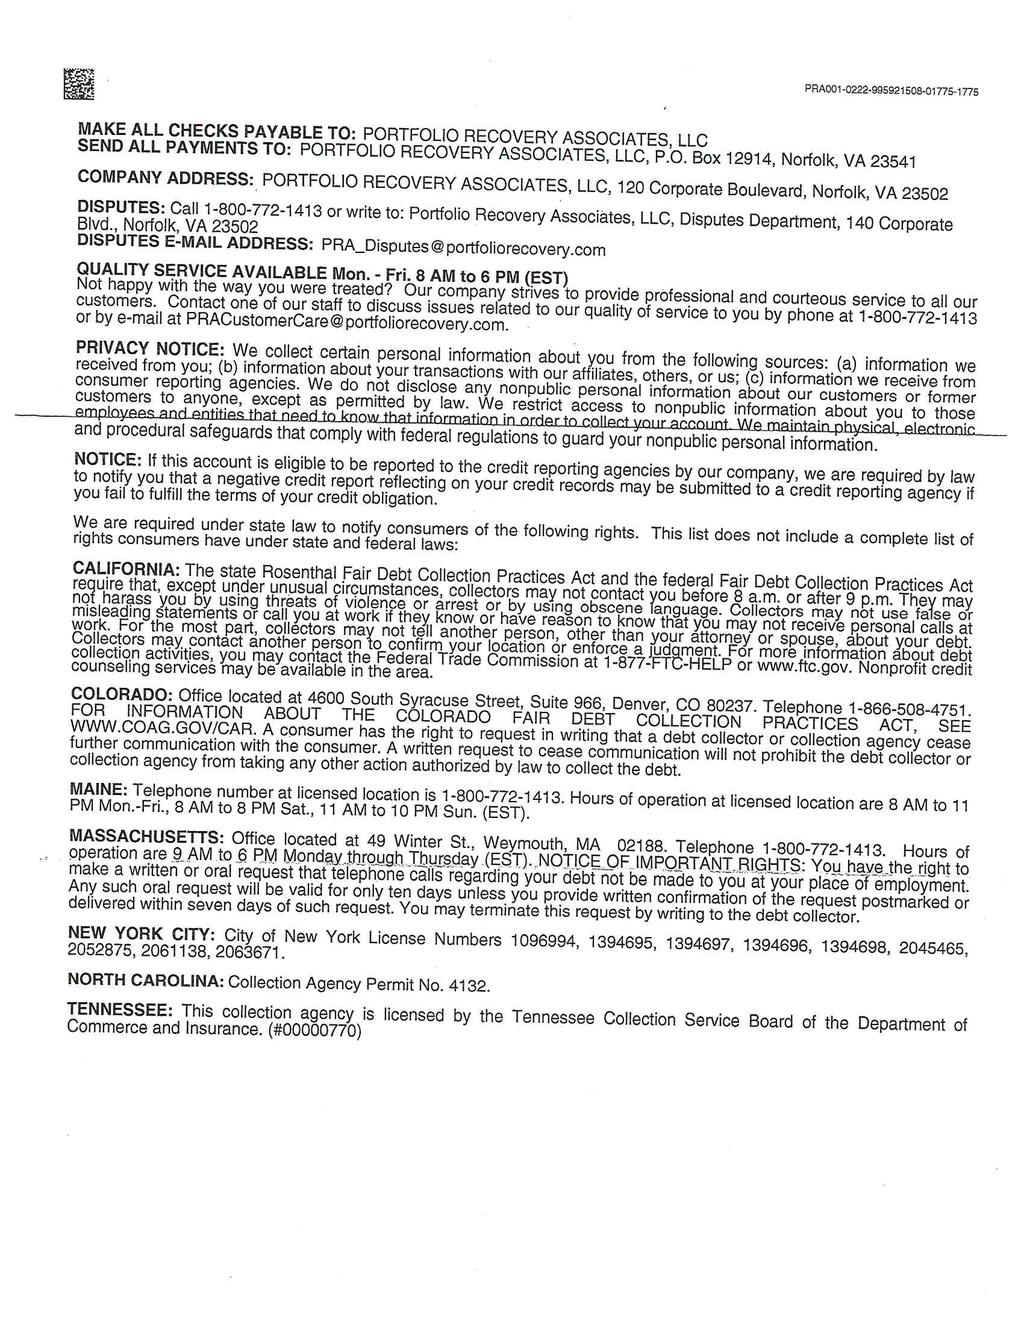 Case 2:18-cv-03711-KM-CLW Document